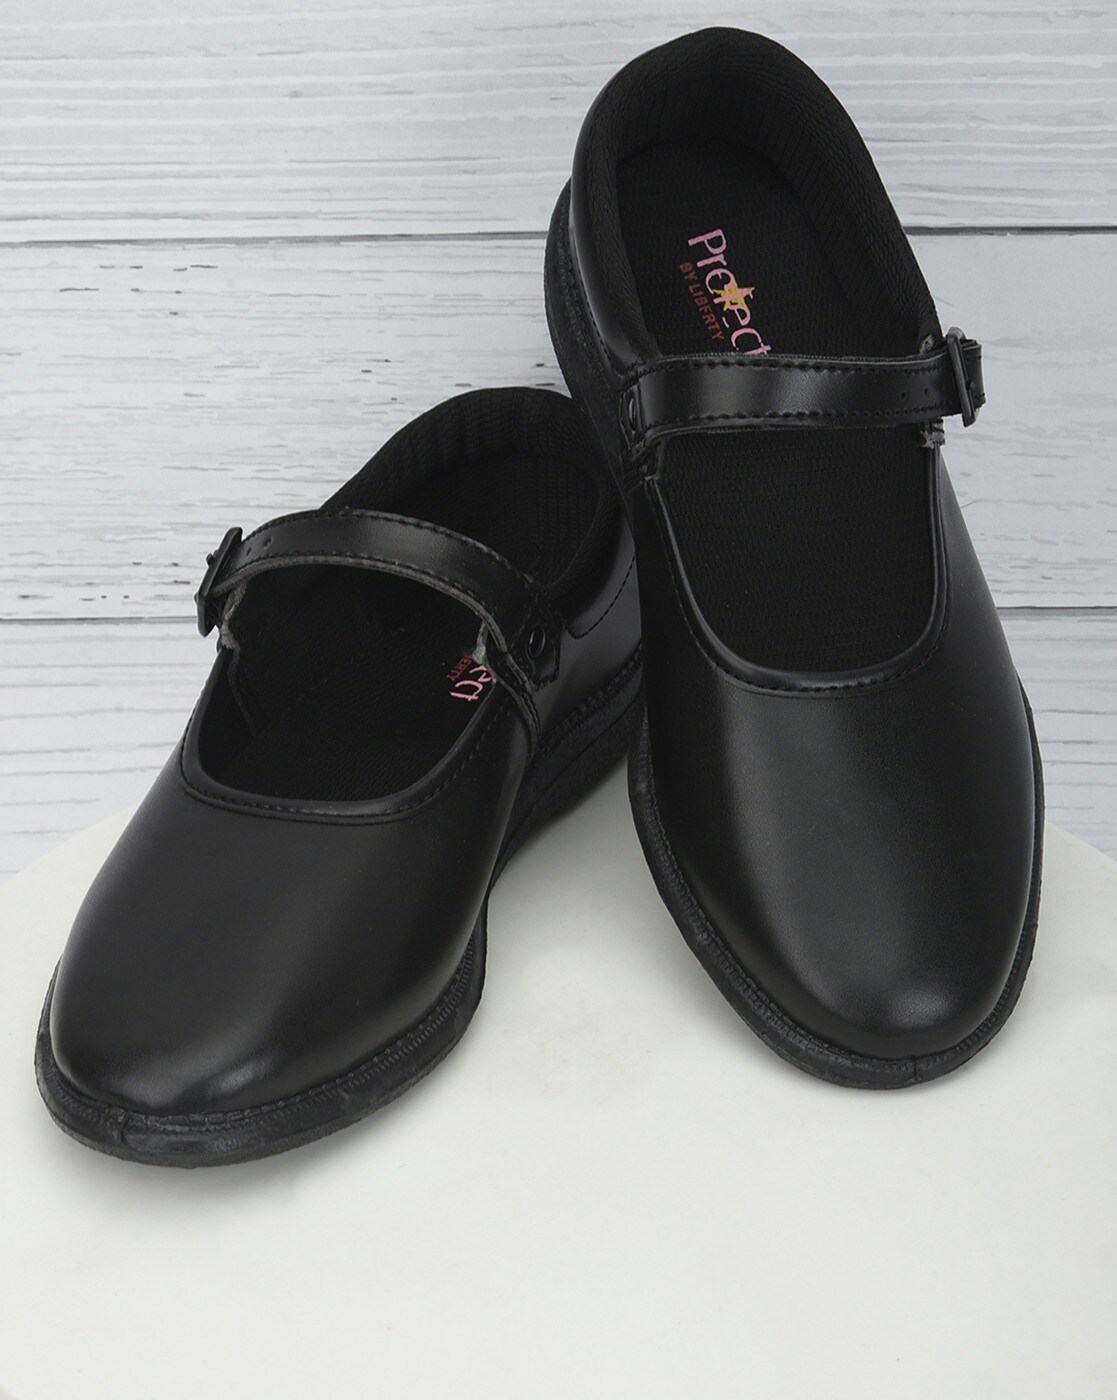 French Toast Boys School Shoes - Black, Size: 5 - Walmart.com